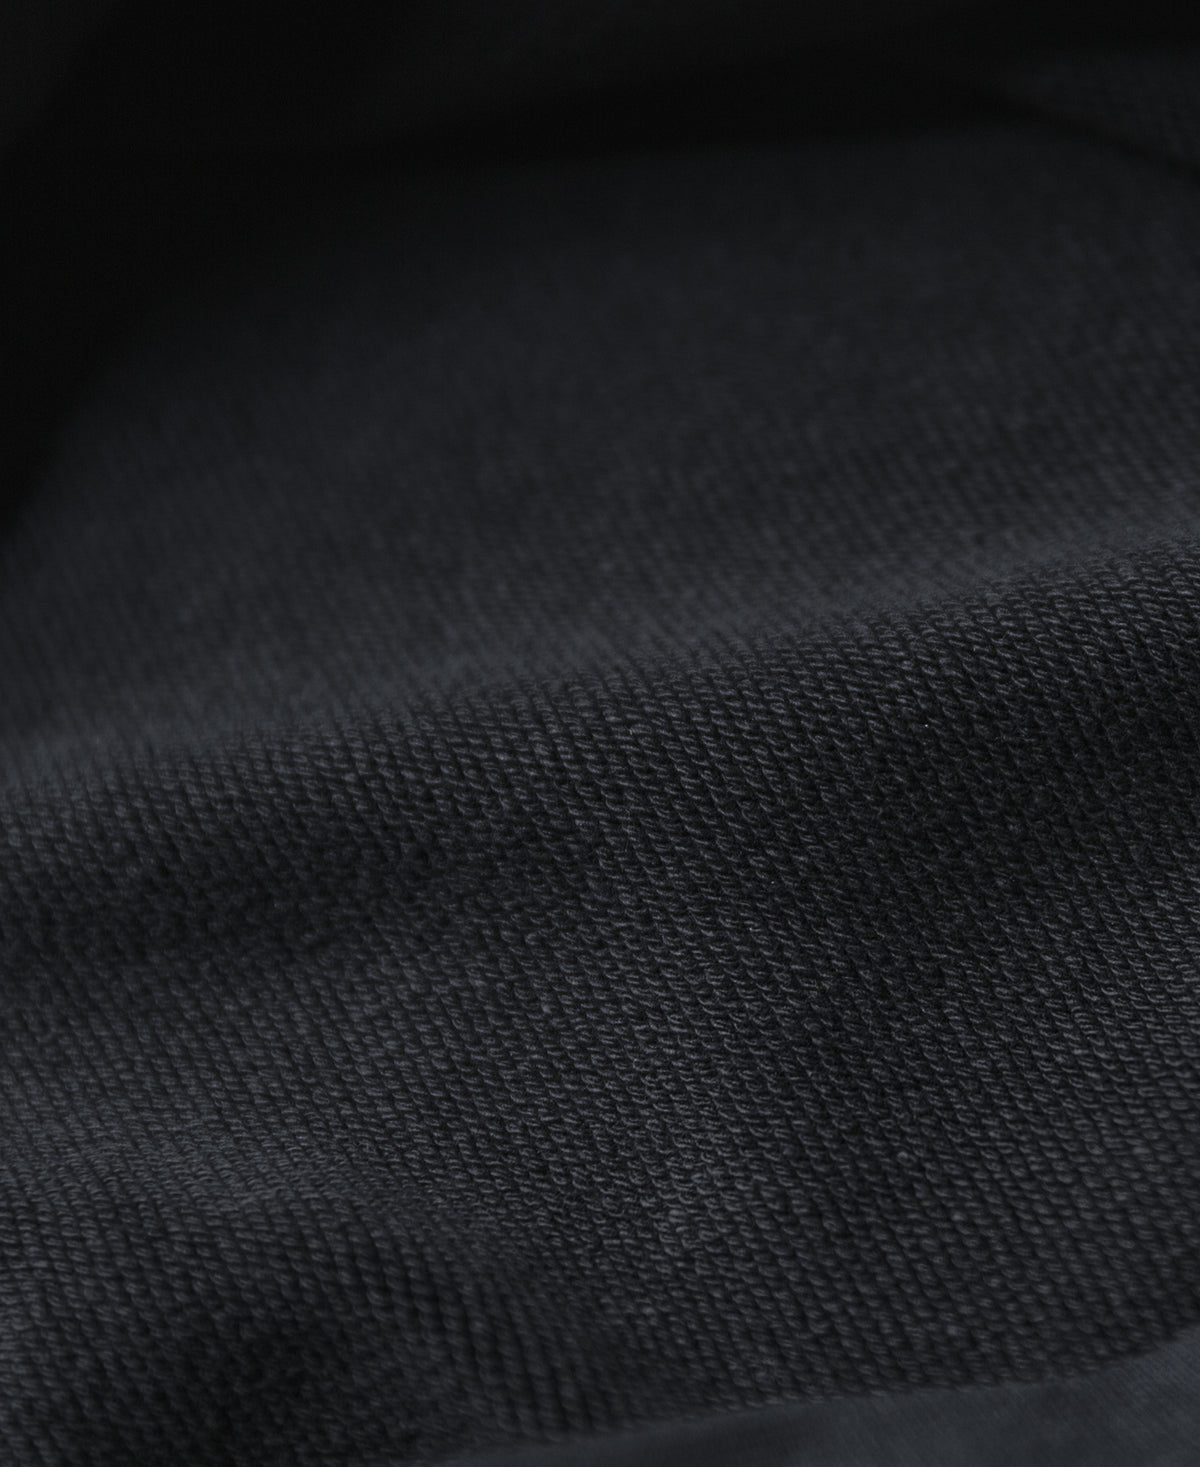 Flying Tigers Military Print Sweatshirt - Black